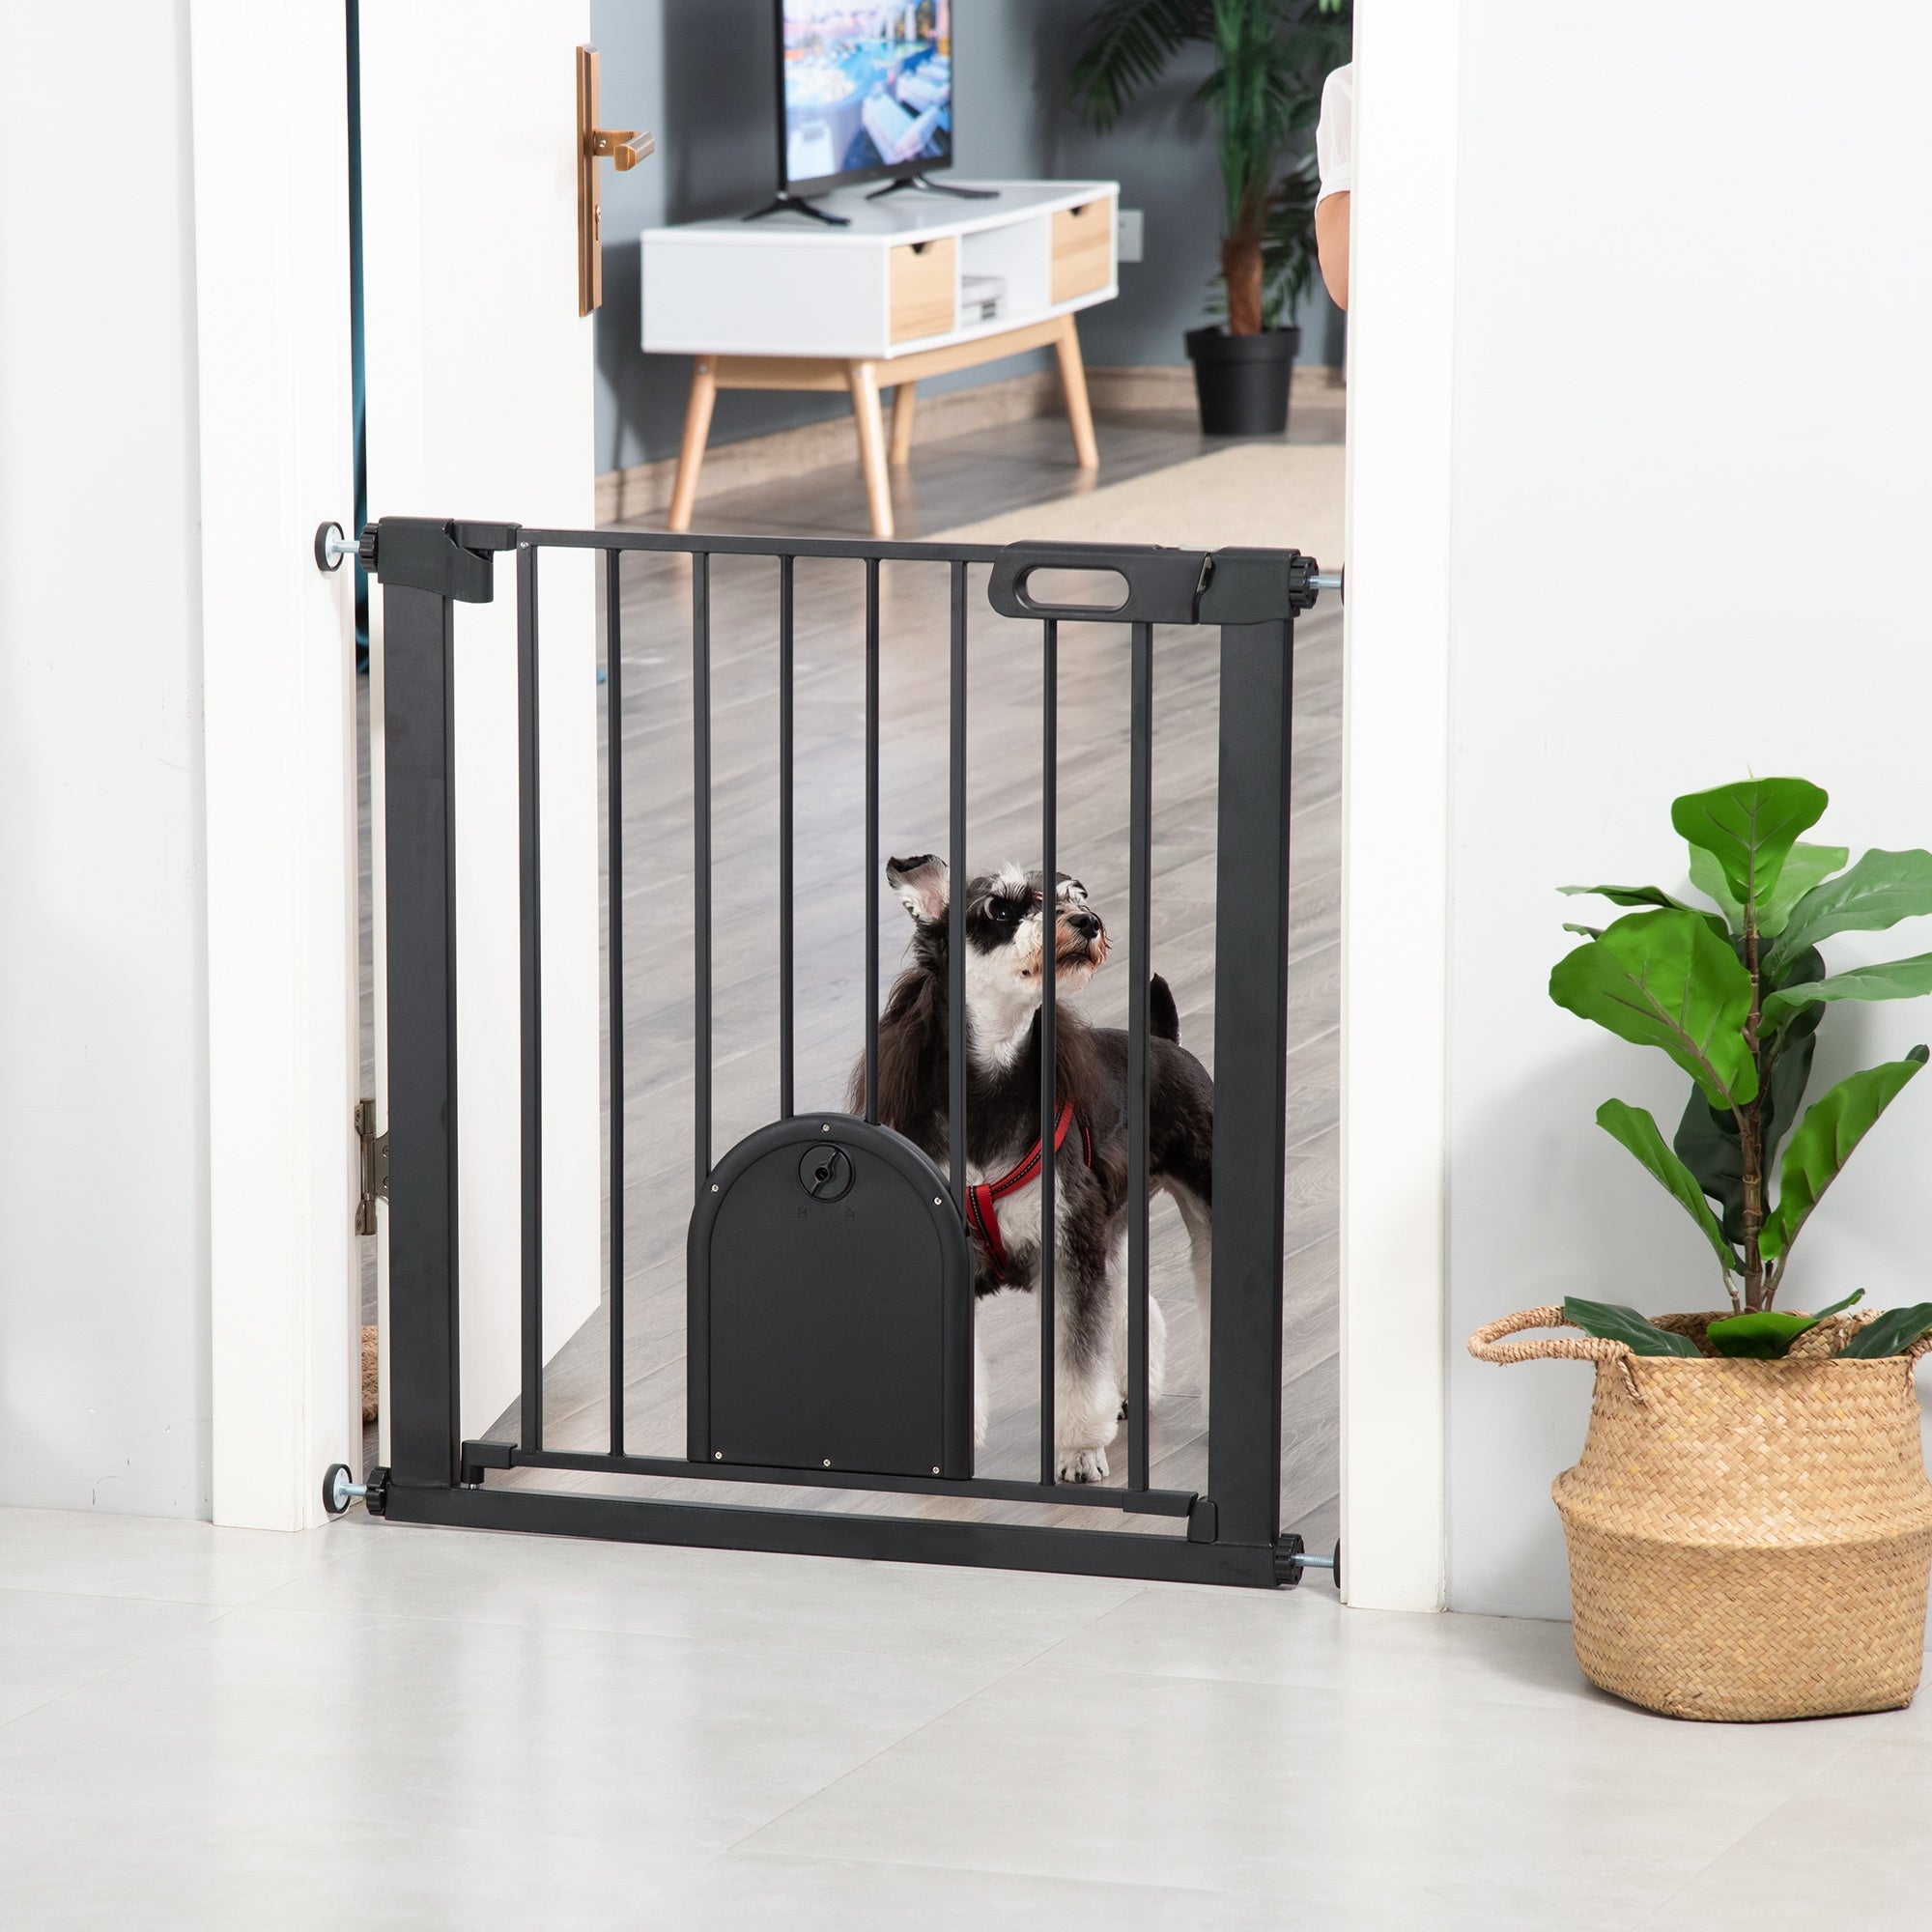 PawHut 75-82 cm Pet Safety Gate Barrier, Stair Pressure Fit, w/ Small Door, Auto Close, Double Locking, for Doorways, Hallways, Black - Inspirely